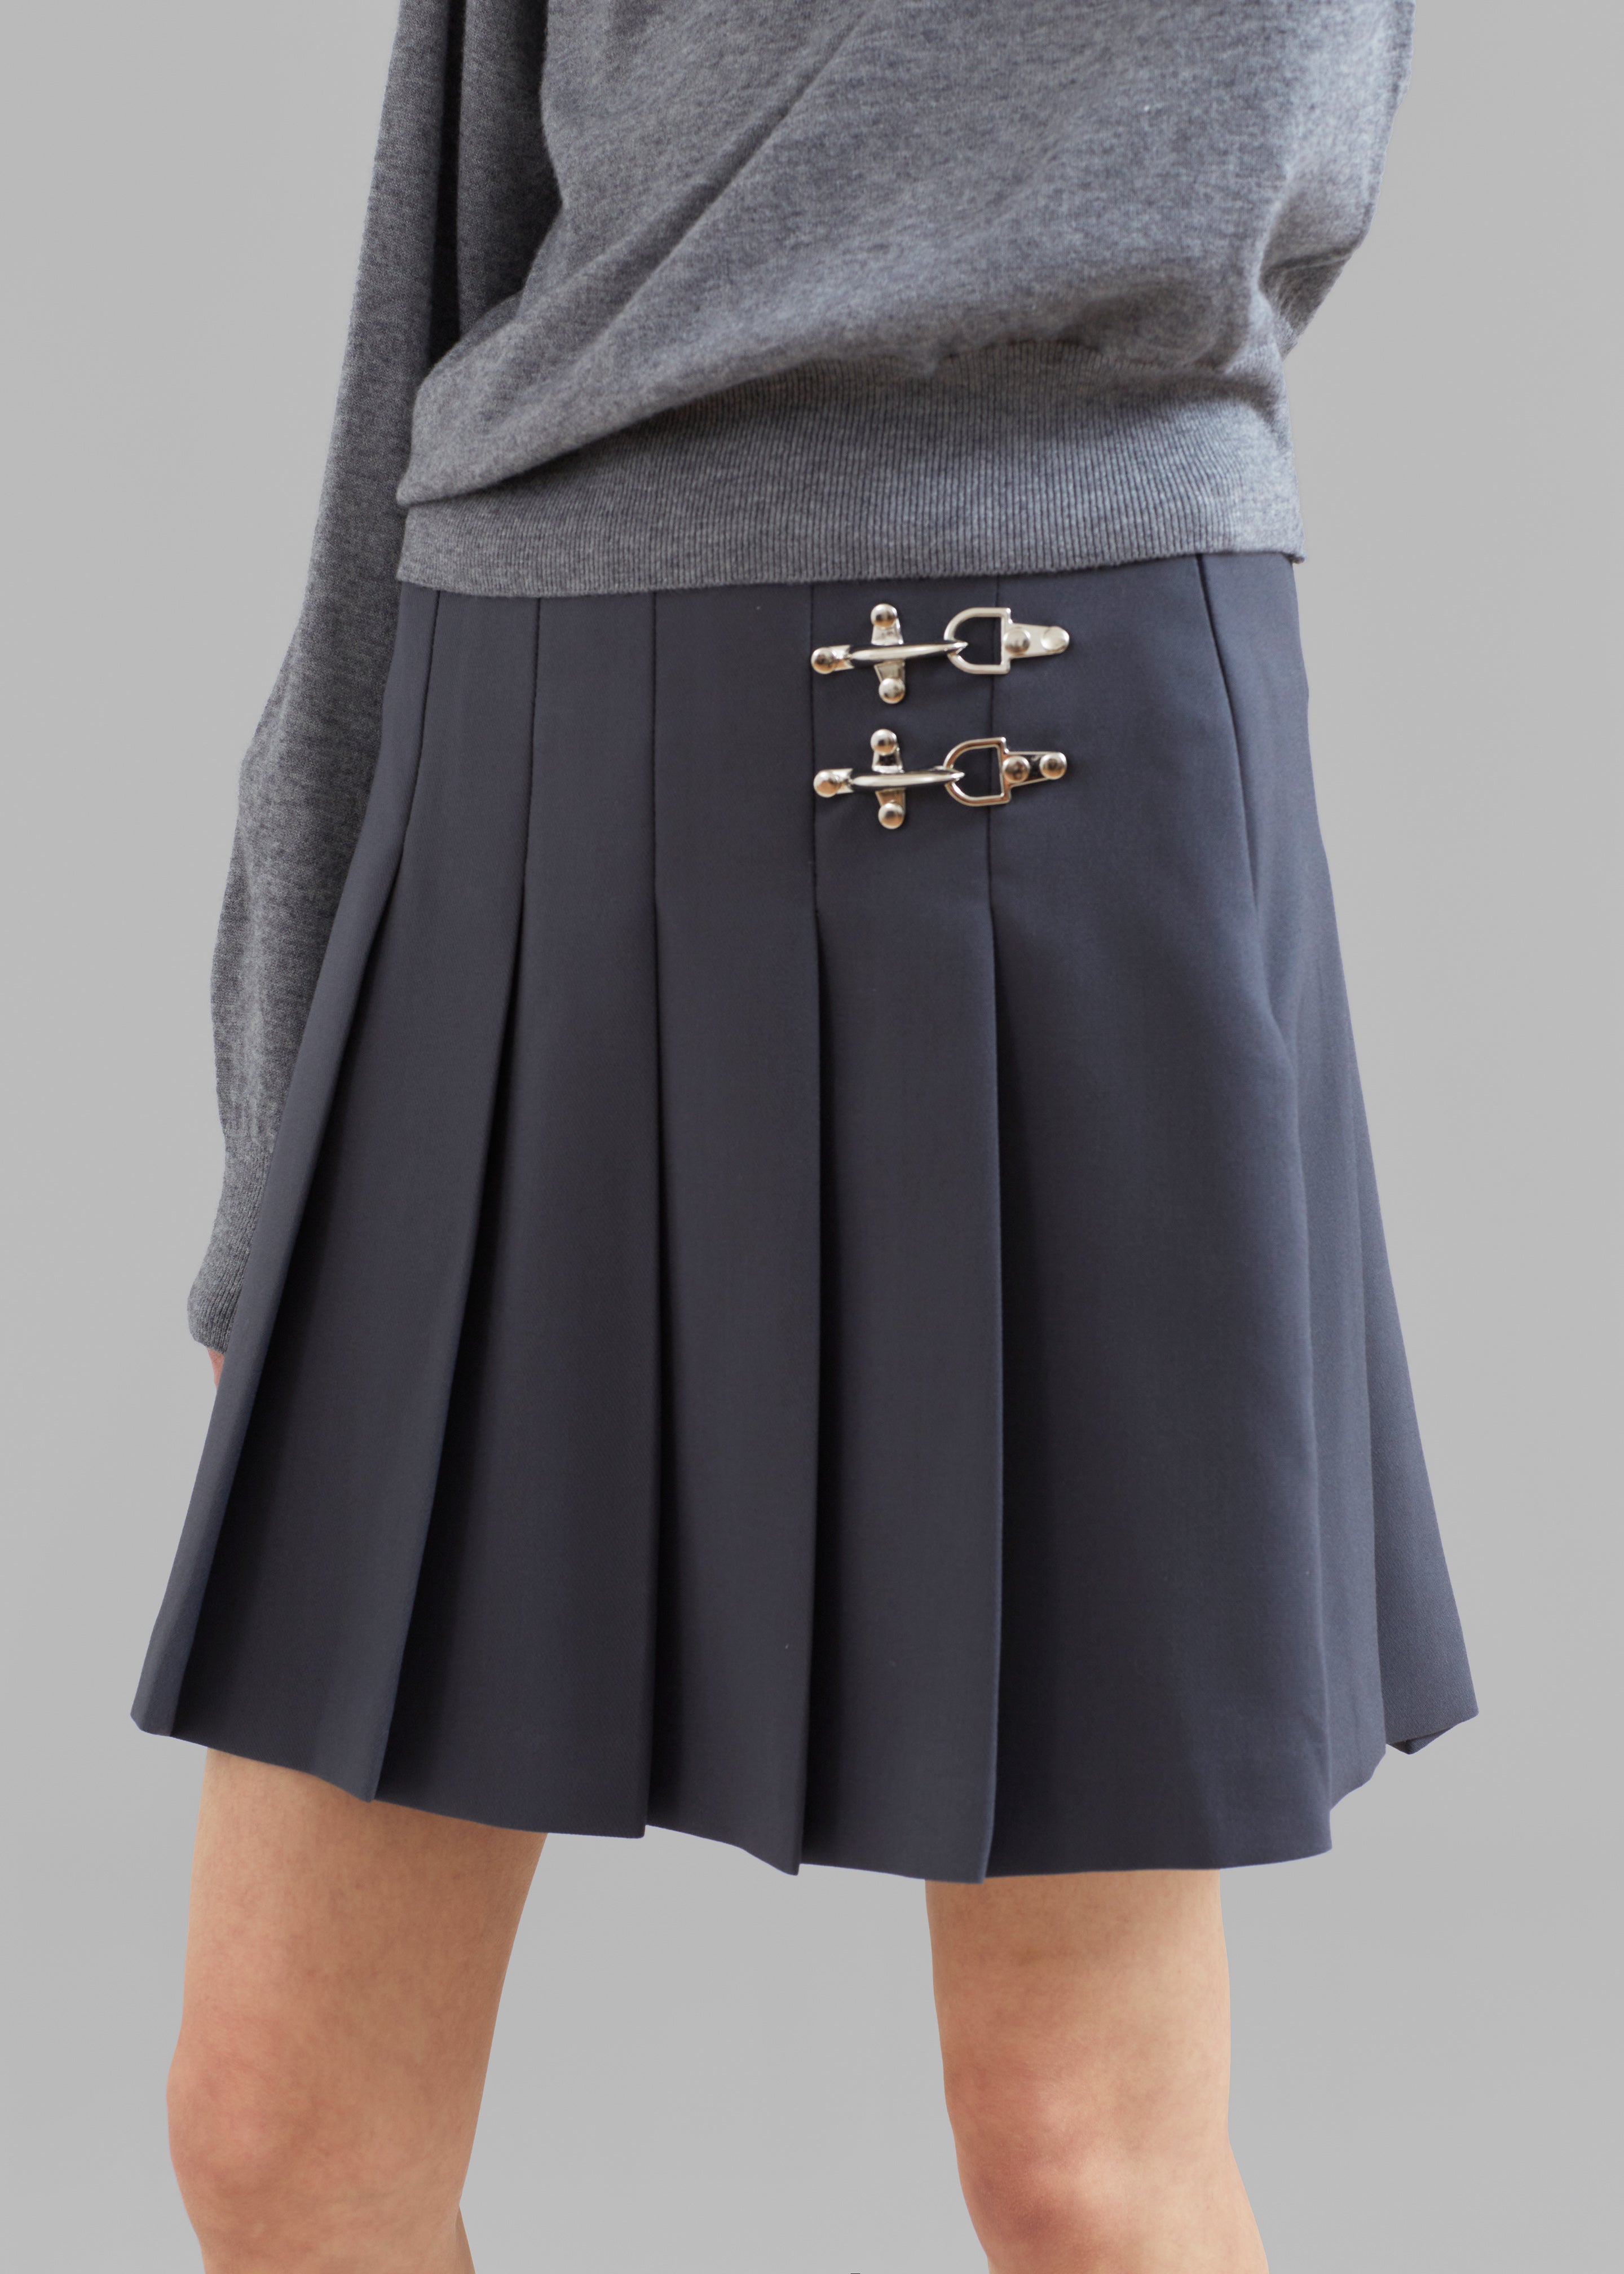 Nyra Pleated Skirt - Charcoal